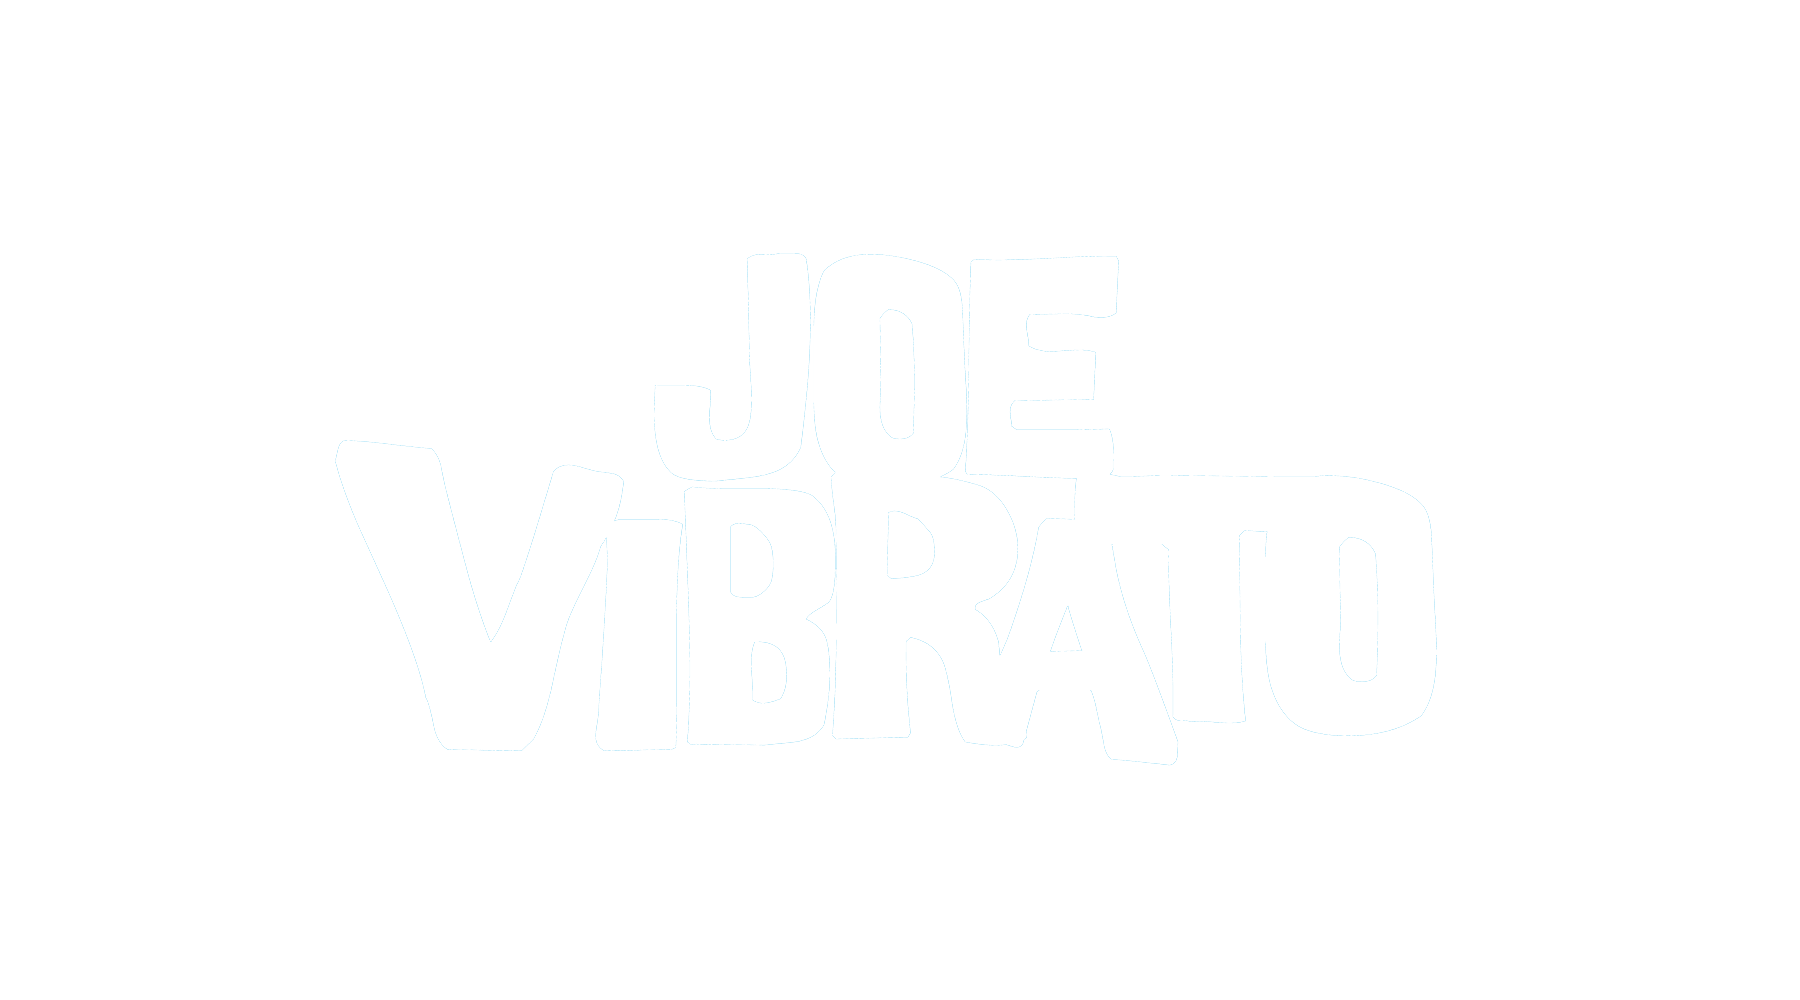 Joe Vibrato